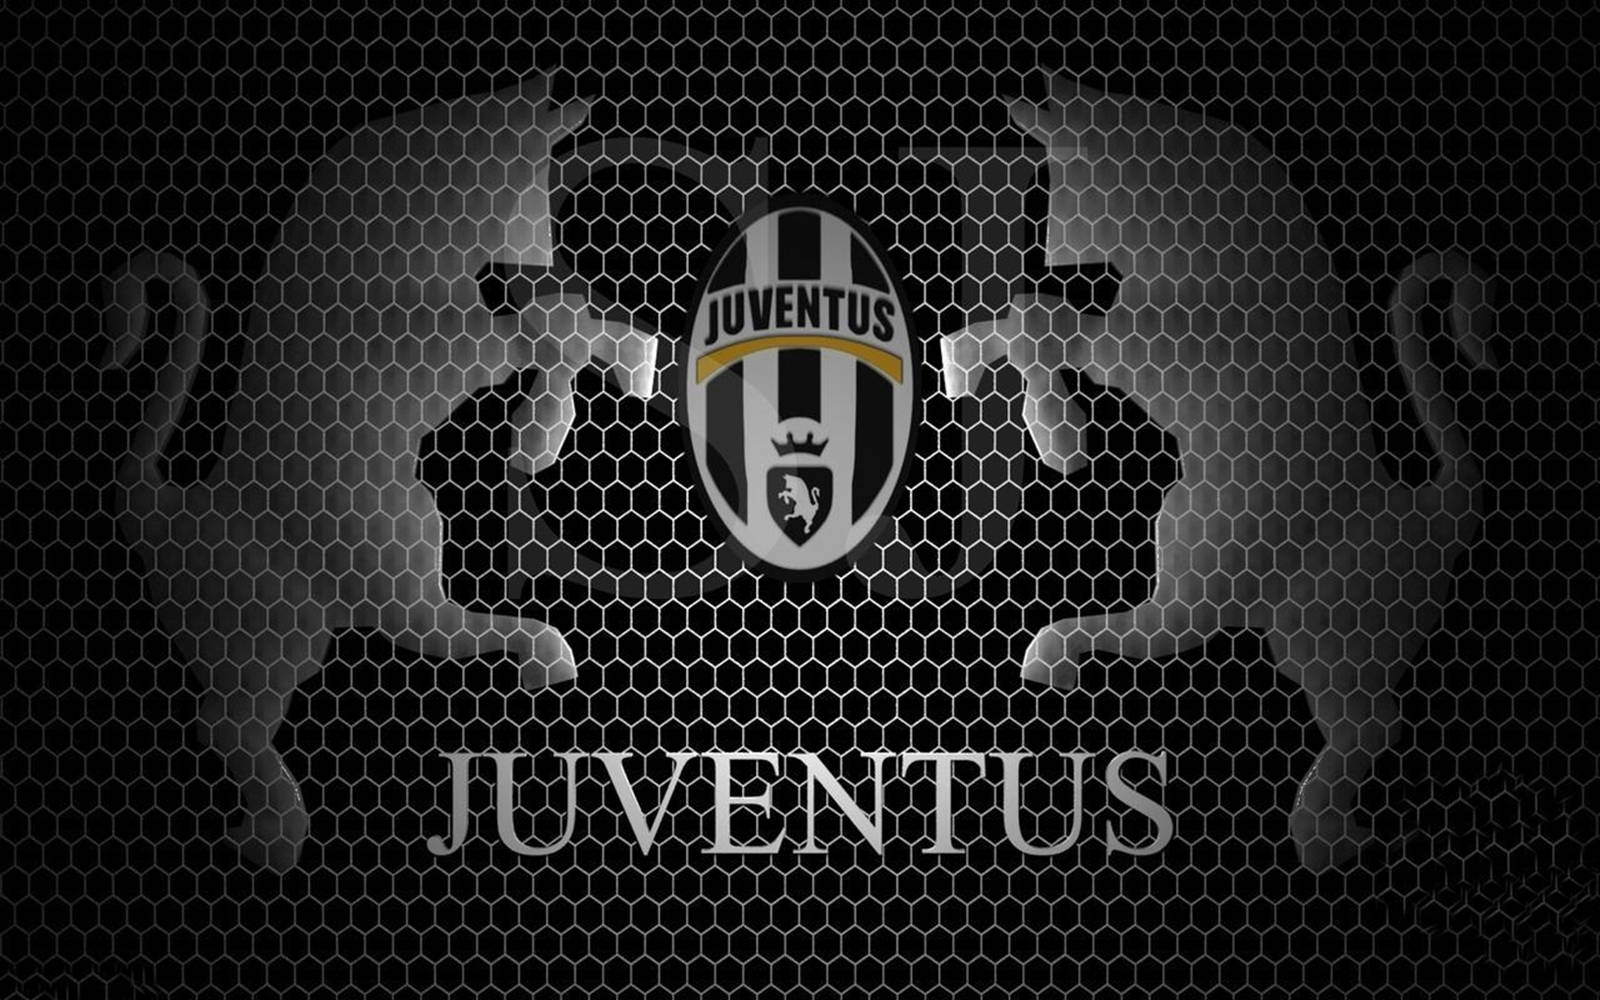 Juventus F.C.'s iconic logo in high resolution Wallpaper